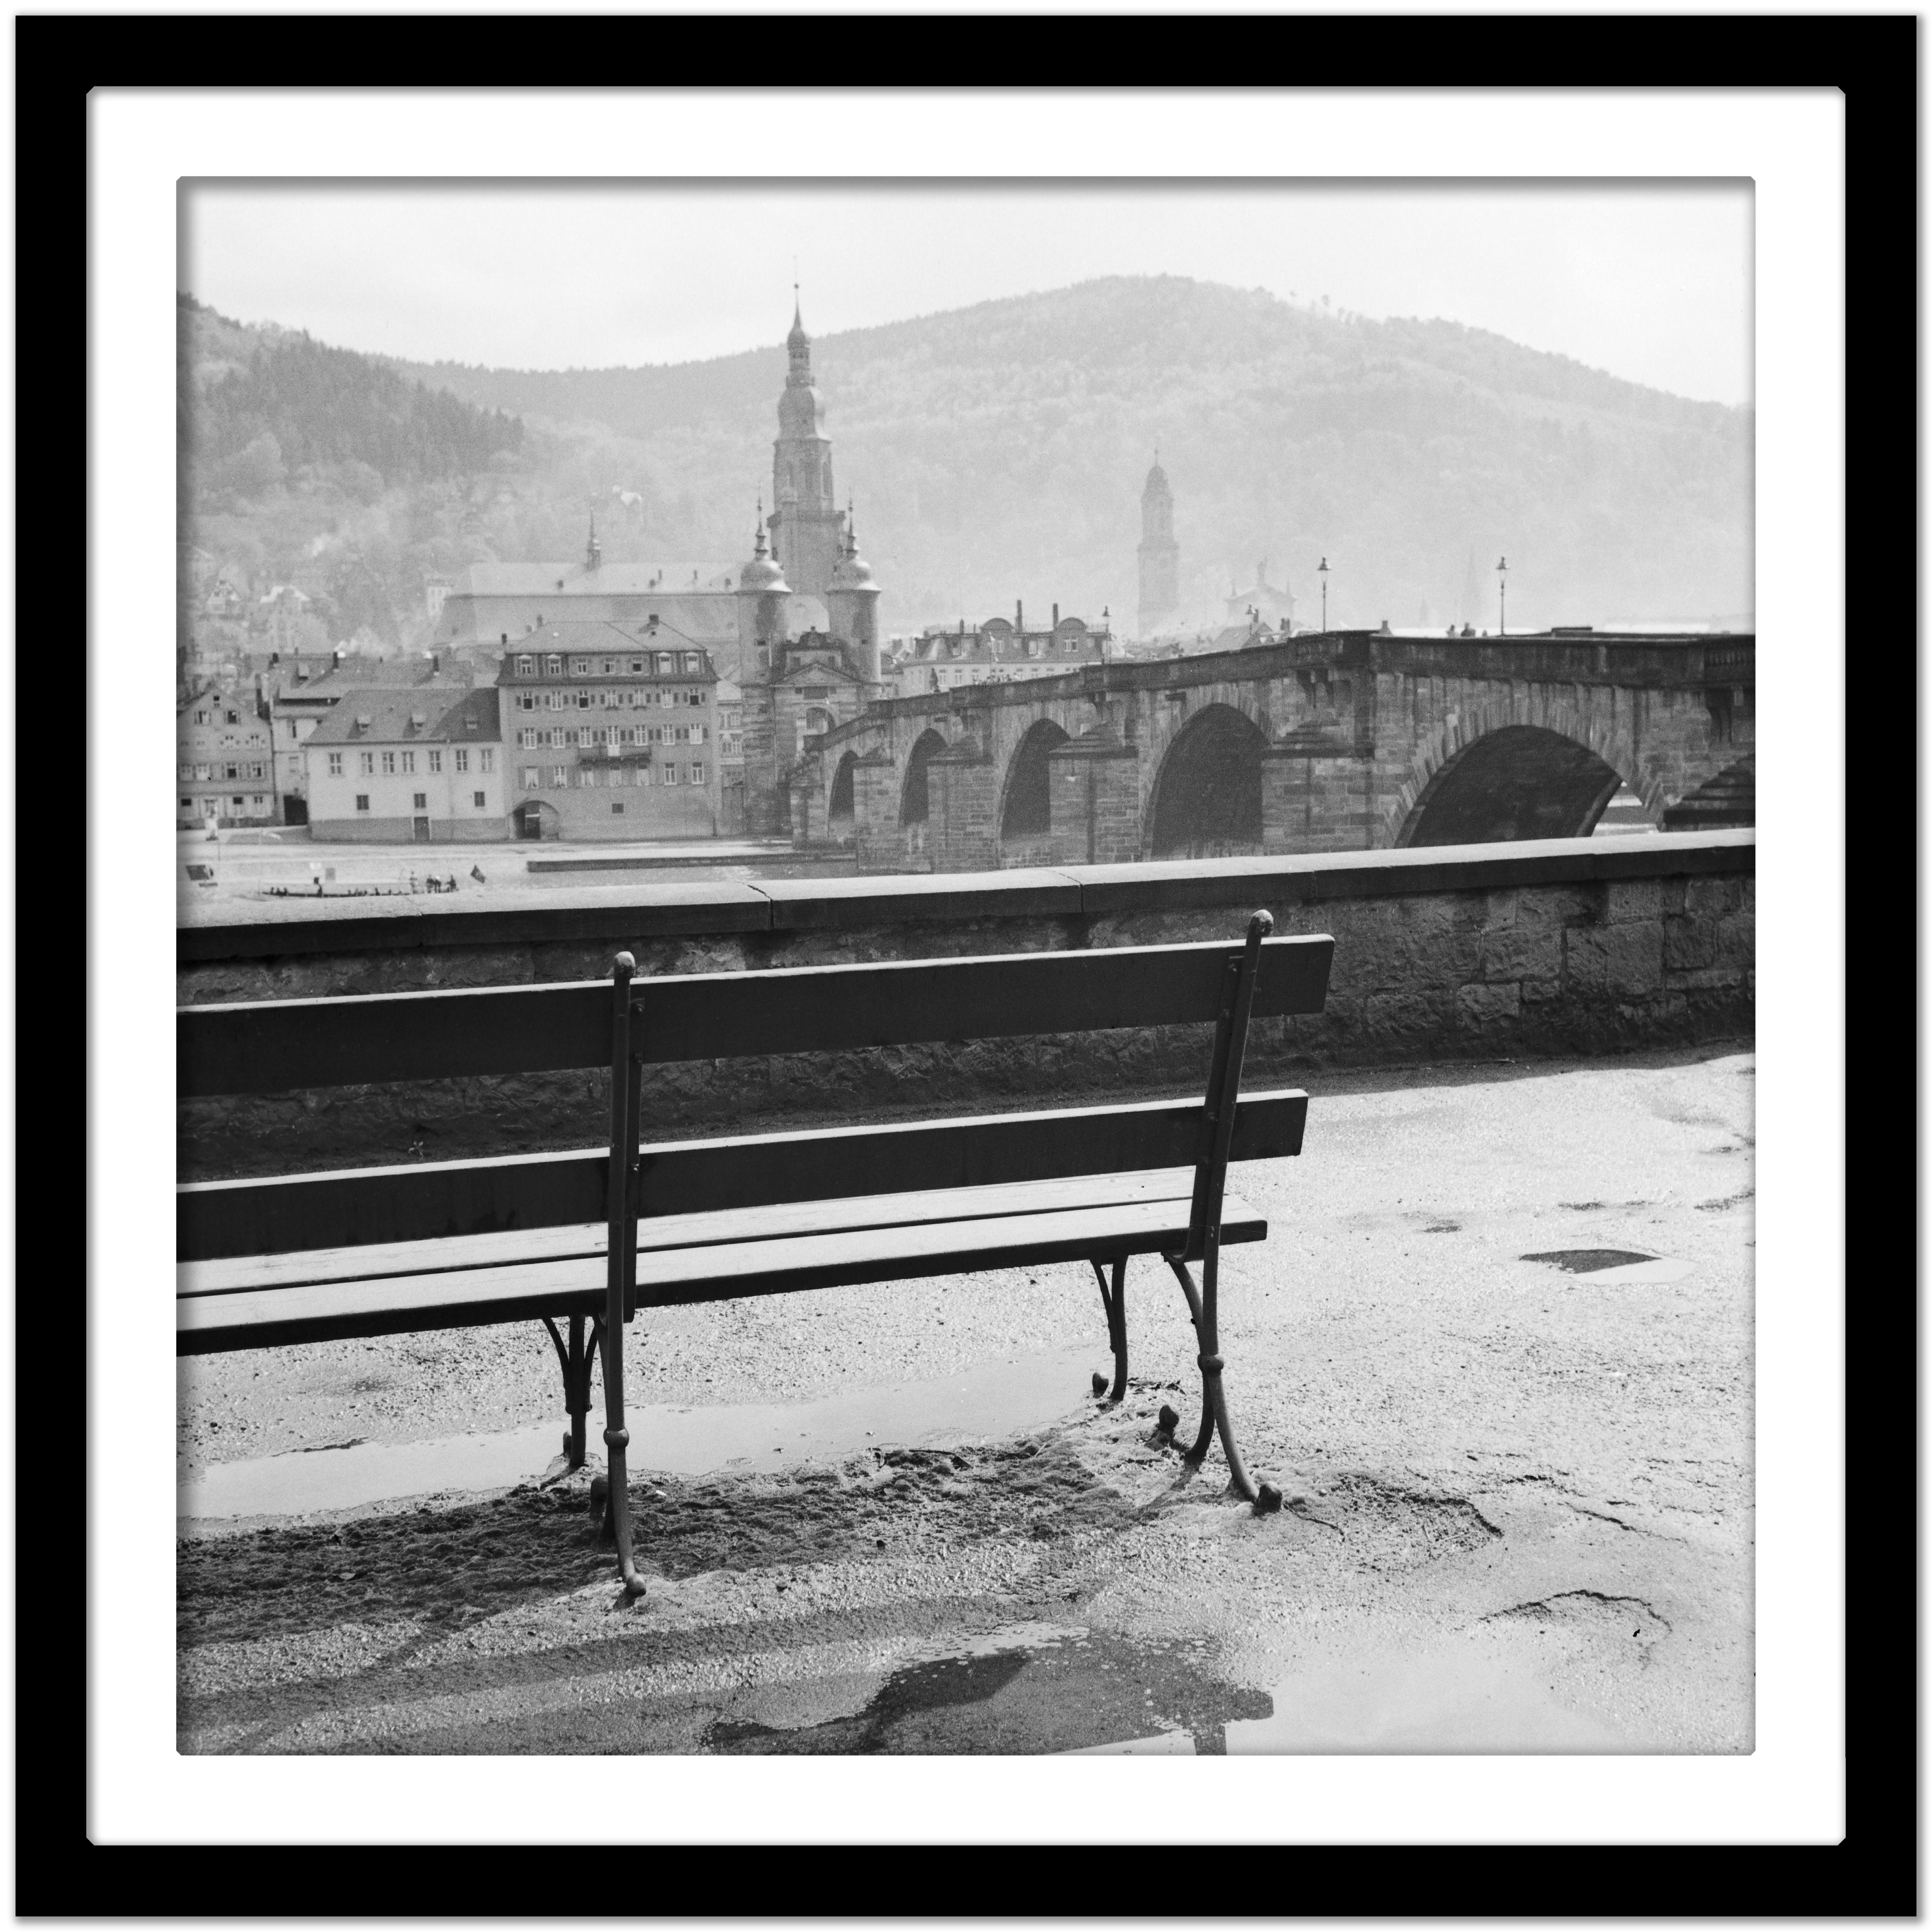 River Neckar, old bridge, church, Heidelberg Germany 1936, Printed Later  - Gray Black and White Photograph by Karl Heinrich Lämmel